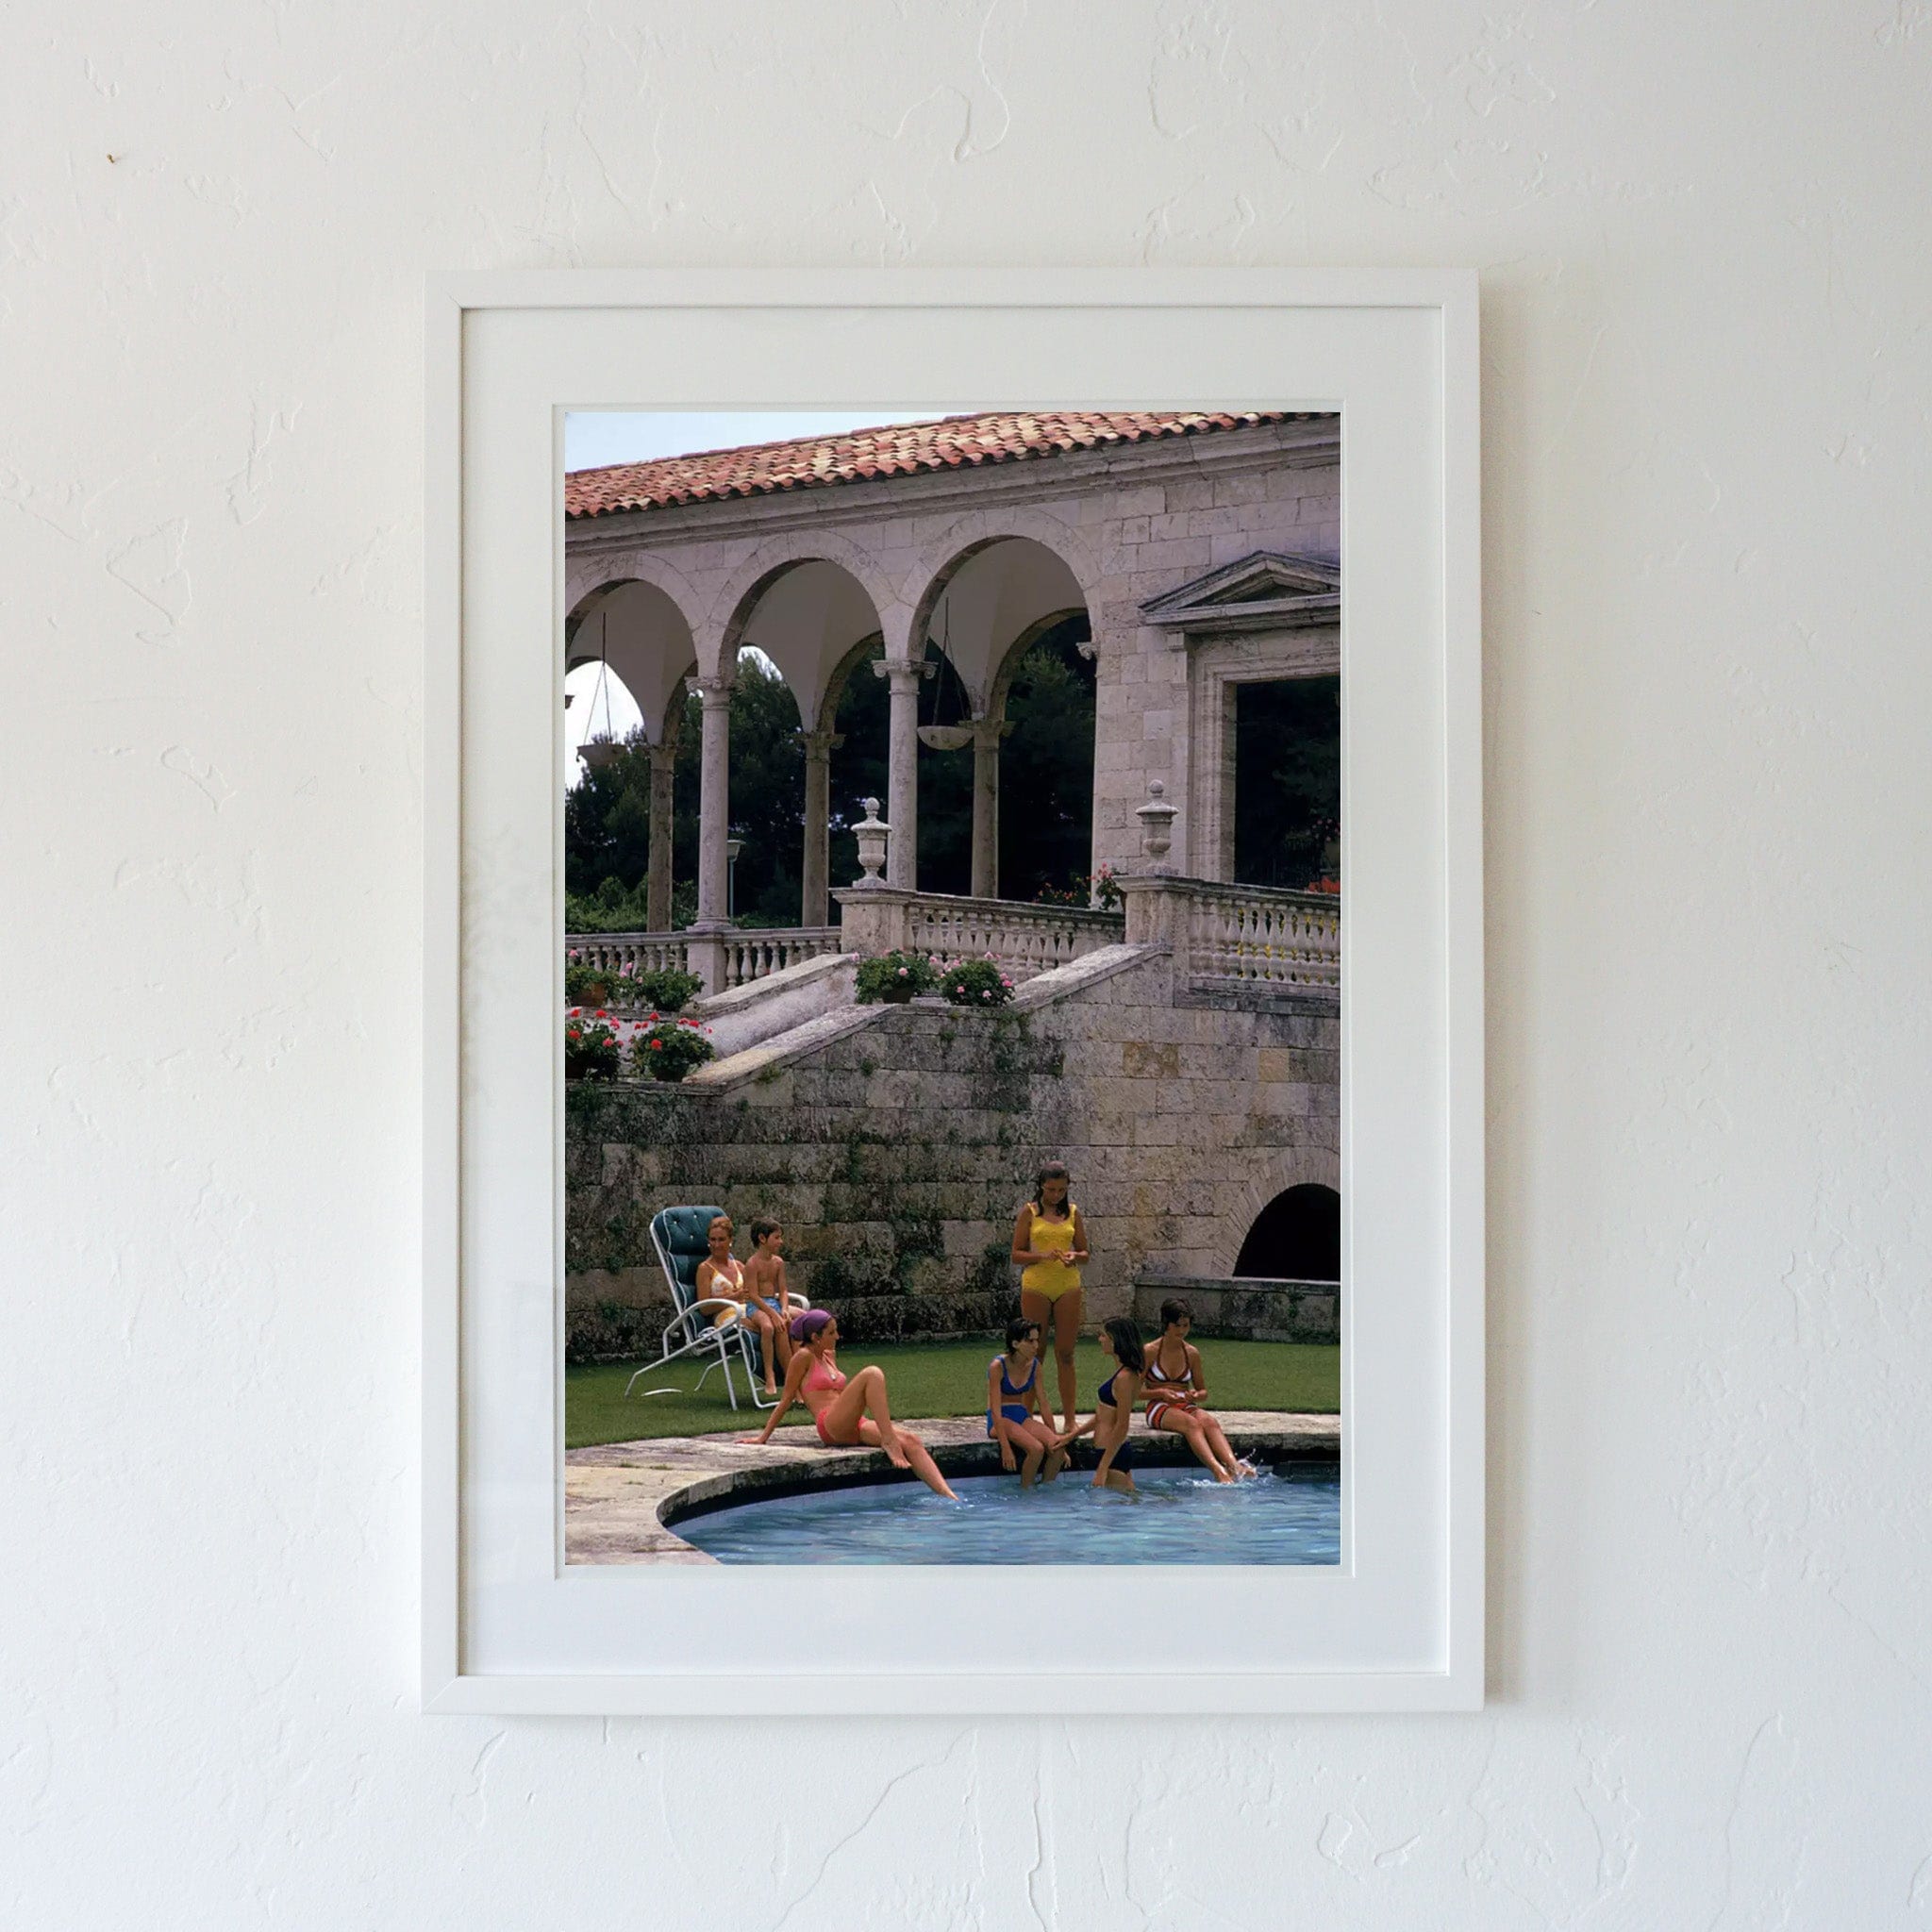 WAX POSTERS Artwork Slim Aarons Framed Photograph - "Gavina Hotel" Getty Images Hulton Archive, Spain, 1970 by Slim Aarons